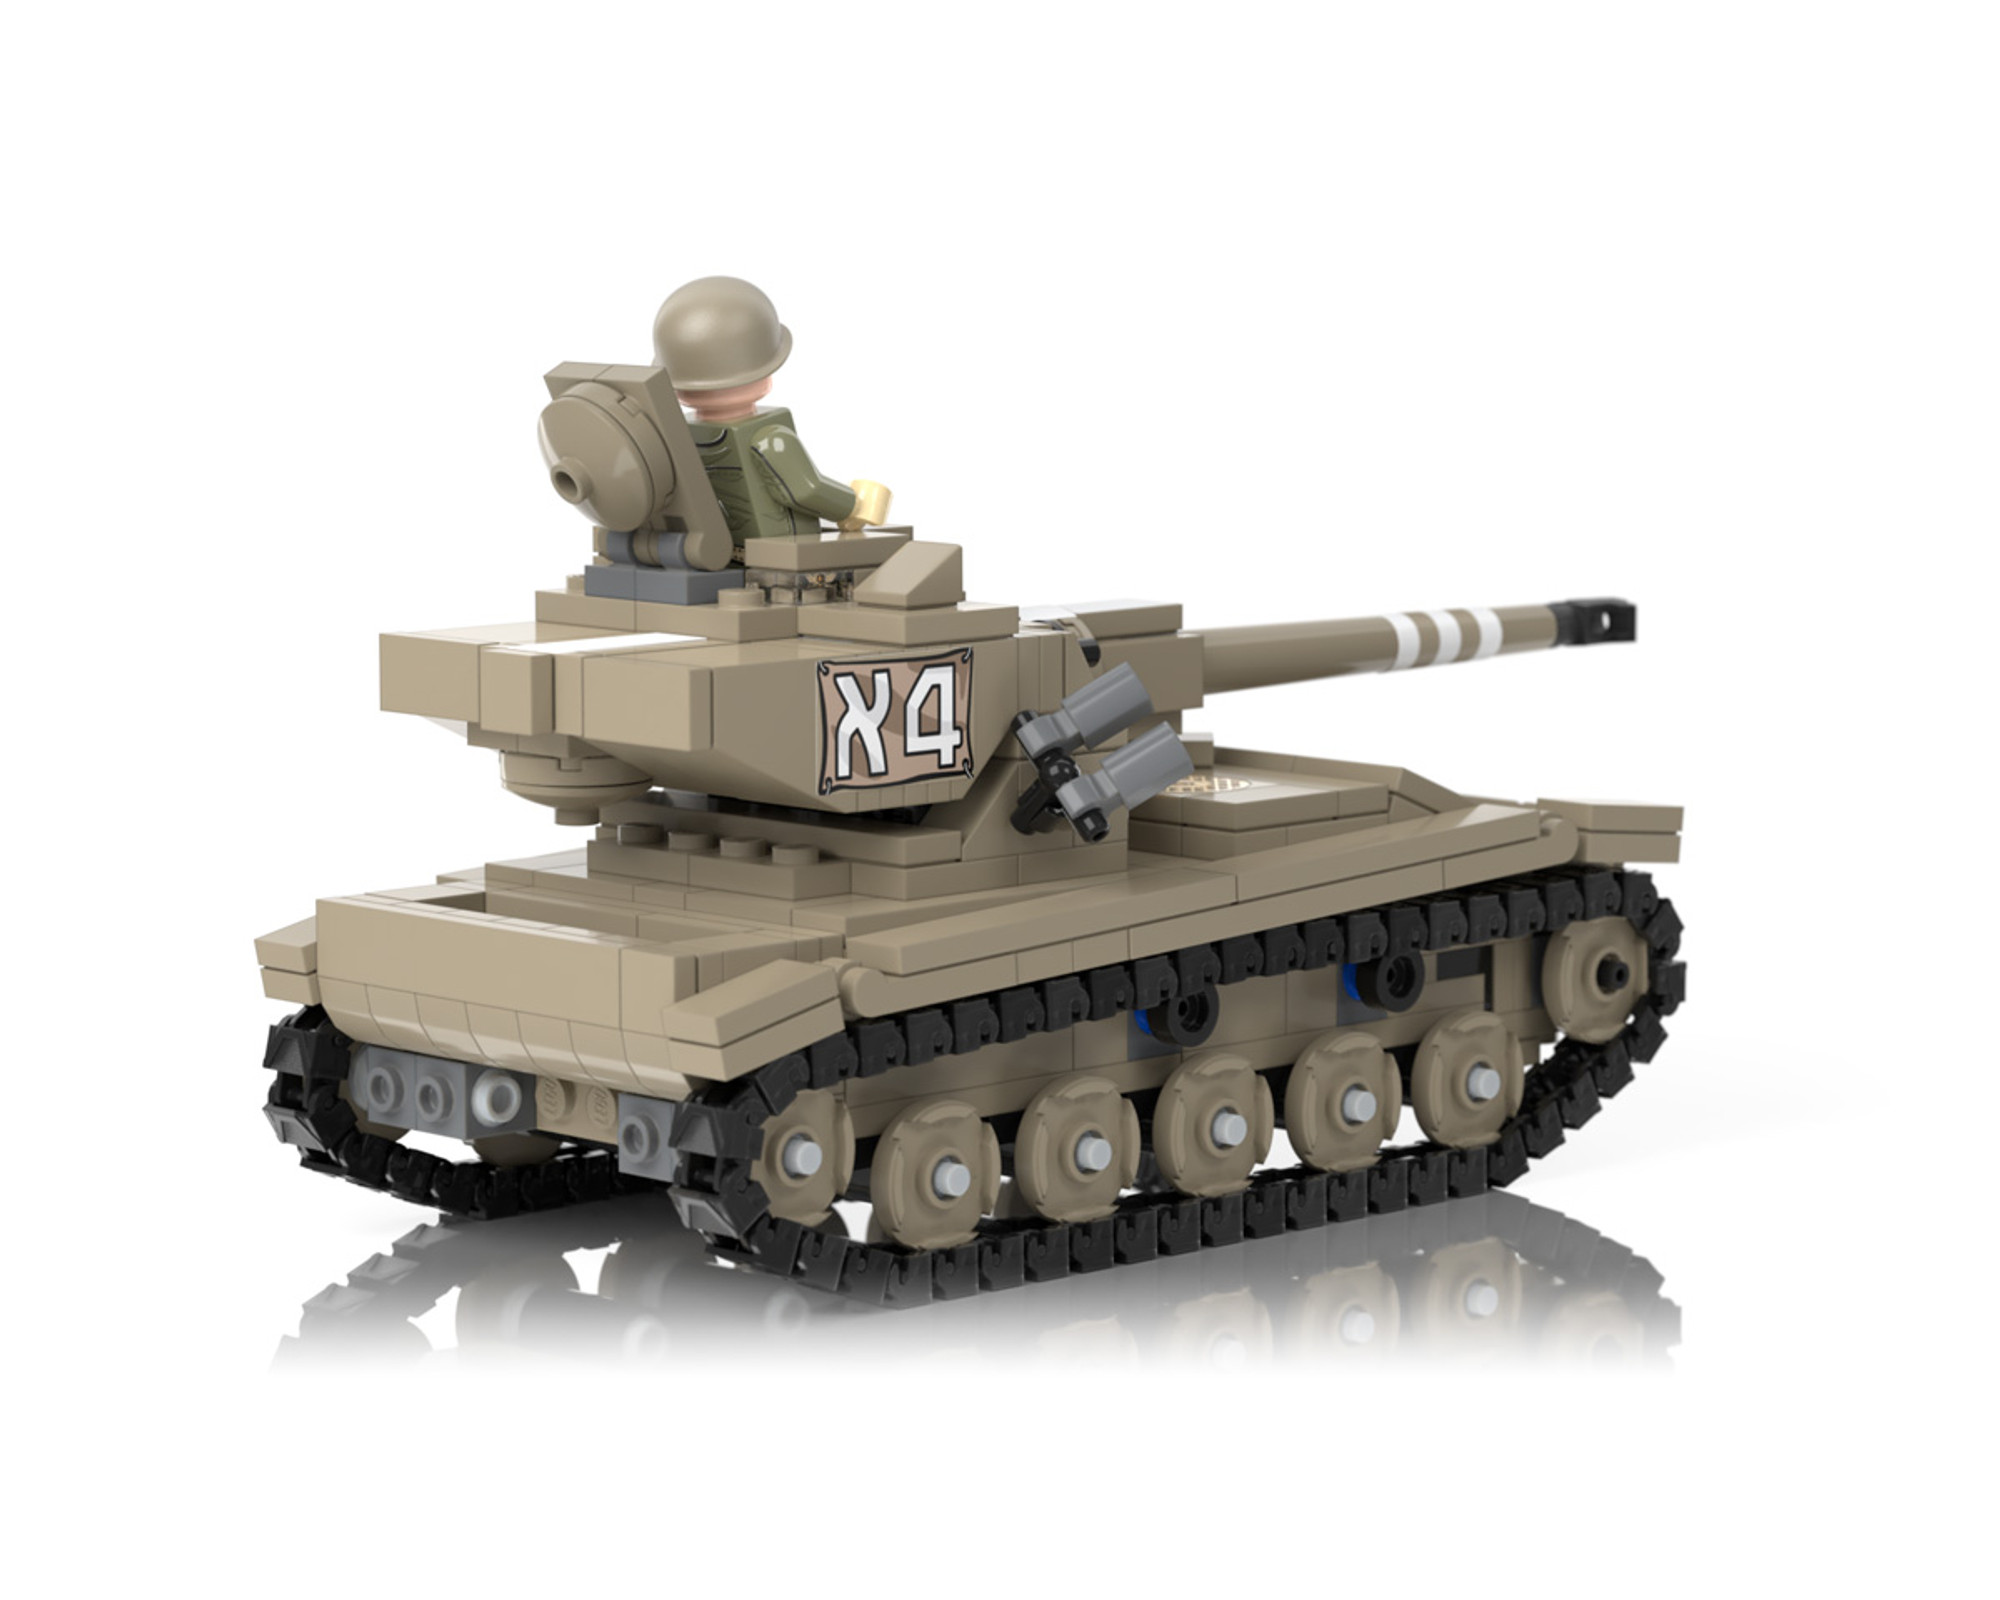 Amx 13 Light Tank Israeli Army Six Day War Brickmania Toys